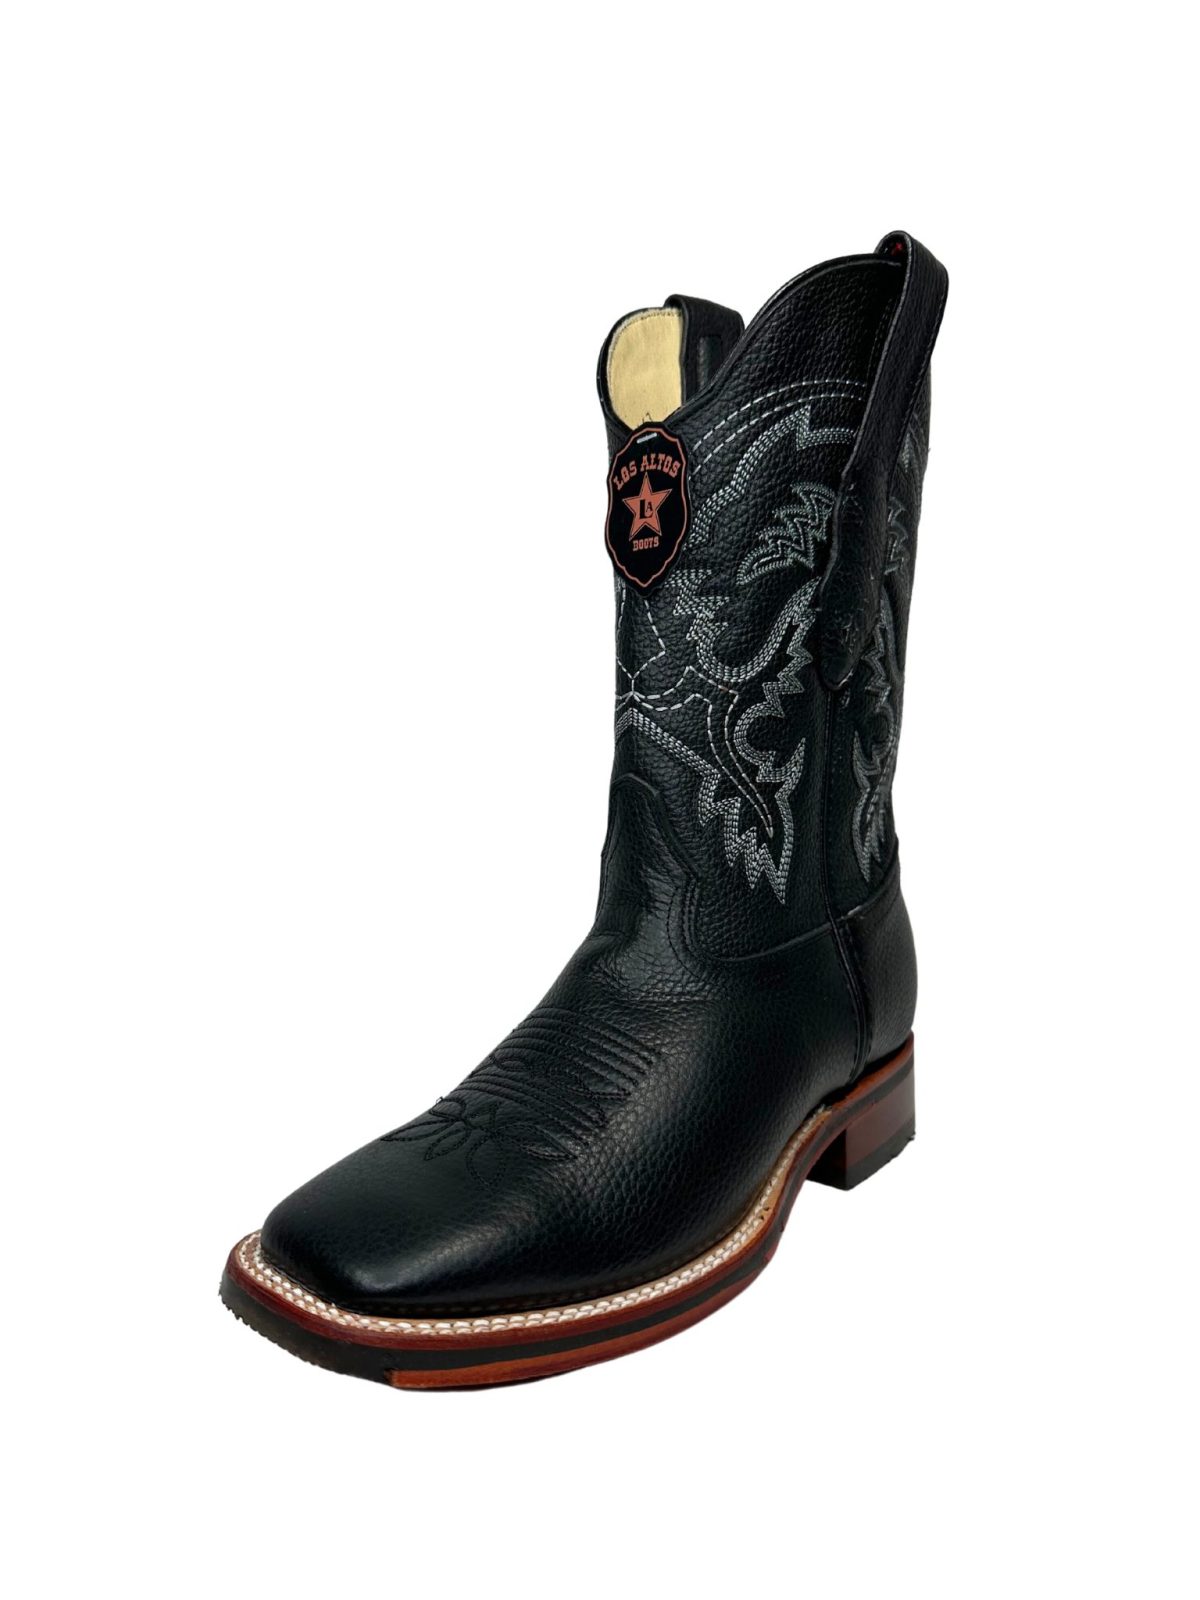 Los Altos Men's Black Square Toe Rubber Sole Leather Boot